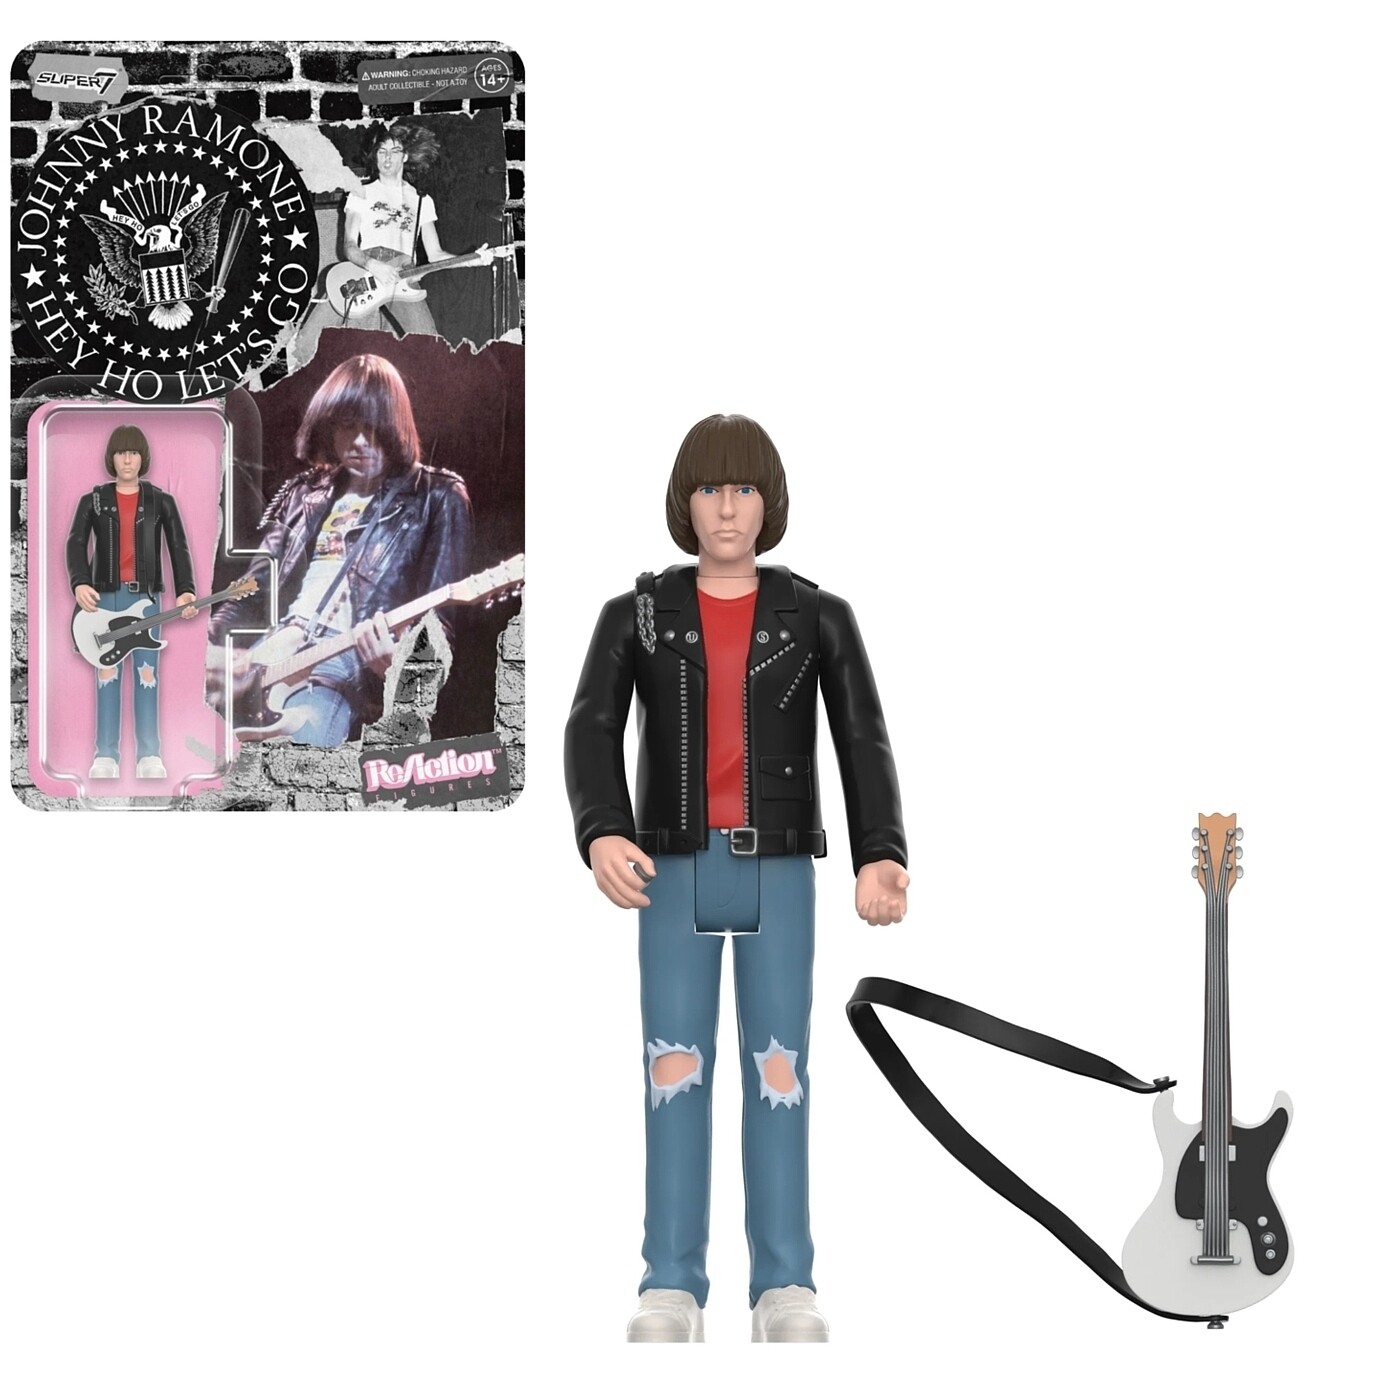 3 3/4"H Ramones - Johnny Ramone ReAction Figure